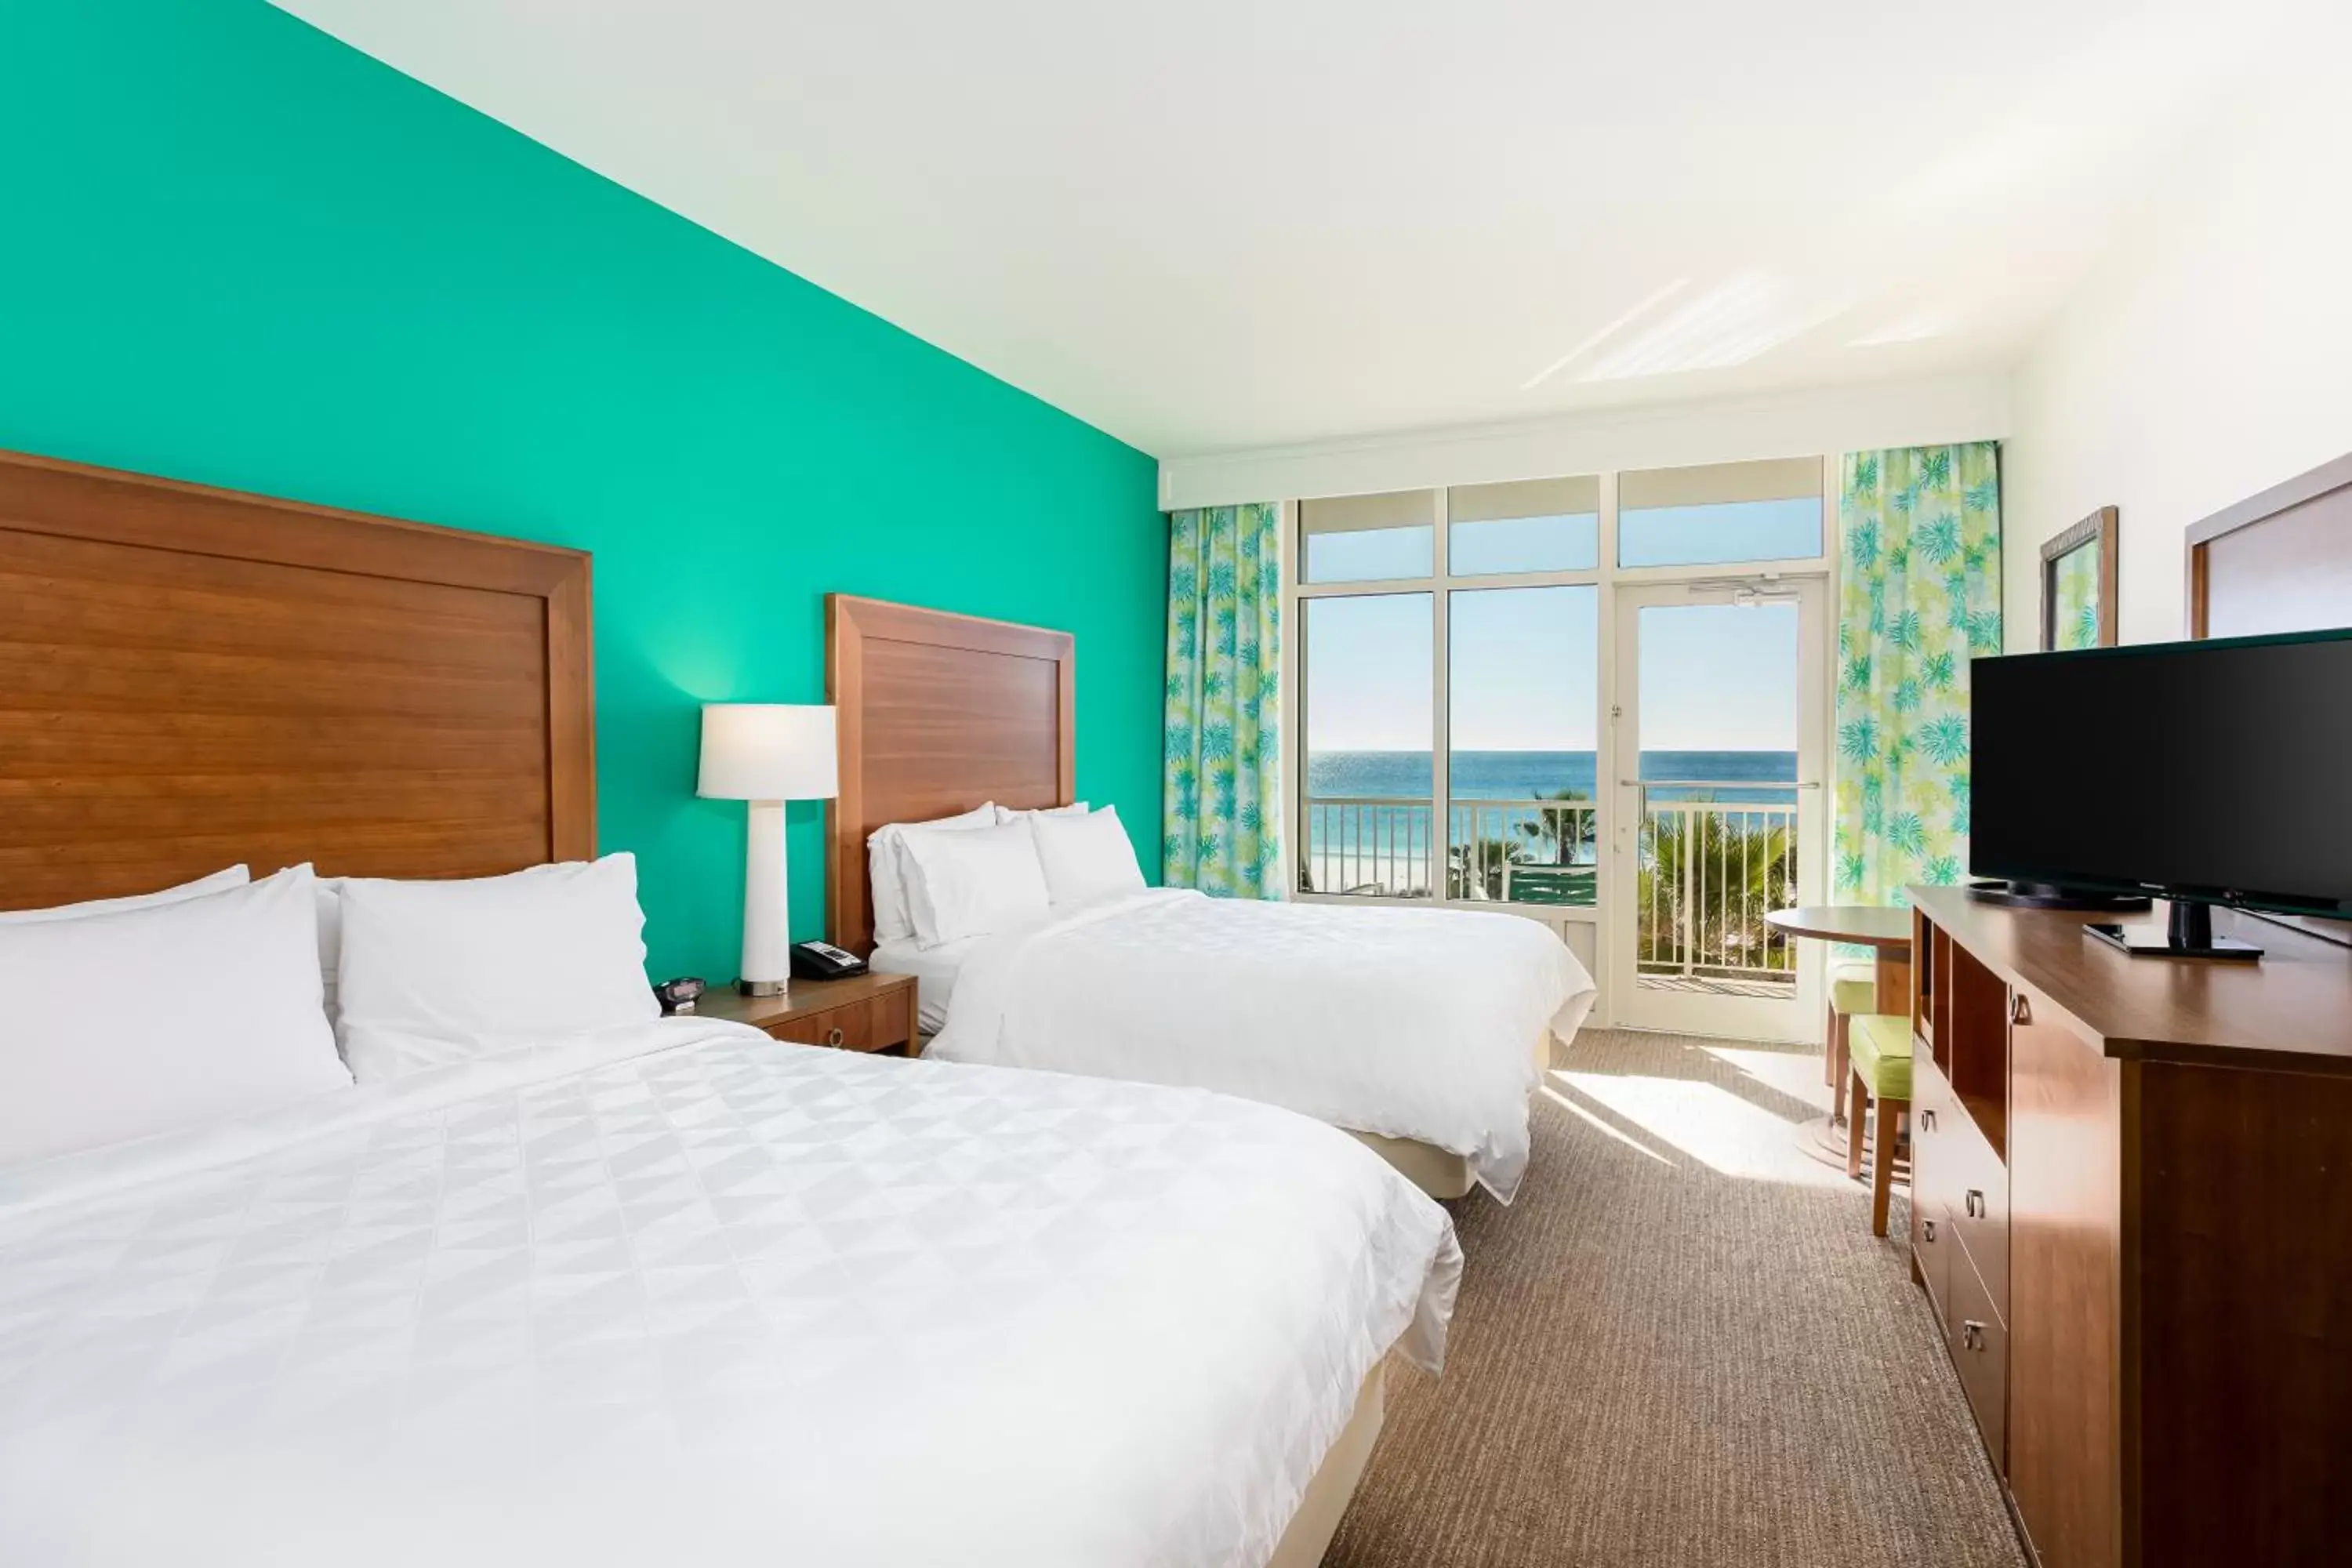 Holiday Inn Resort Fort Walton Beach, an IHG Hotel